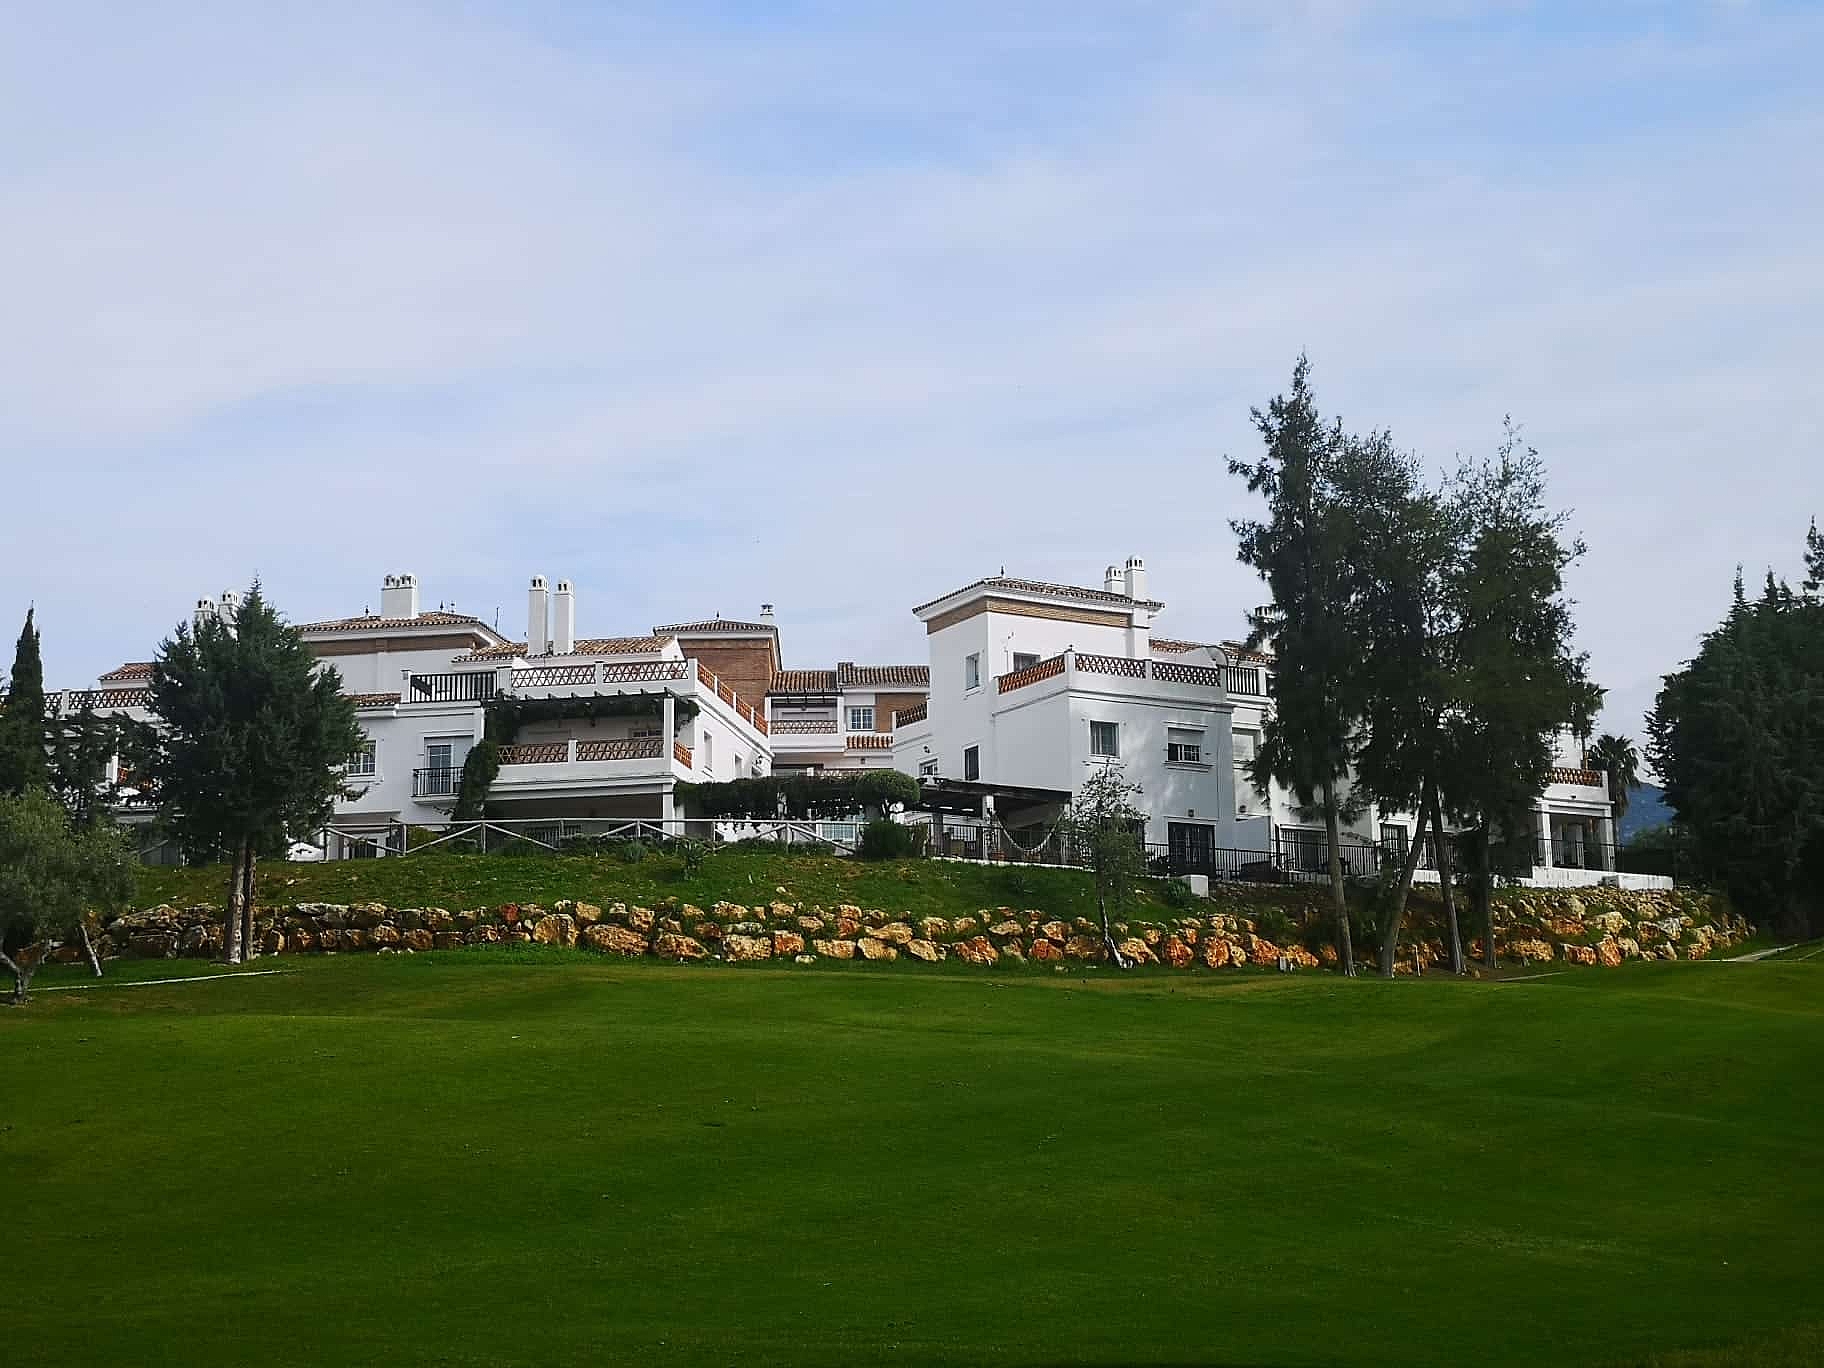 Lauro Golf Resort